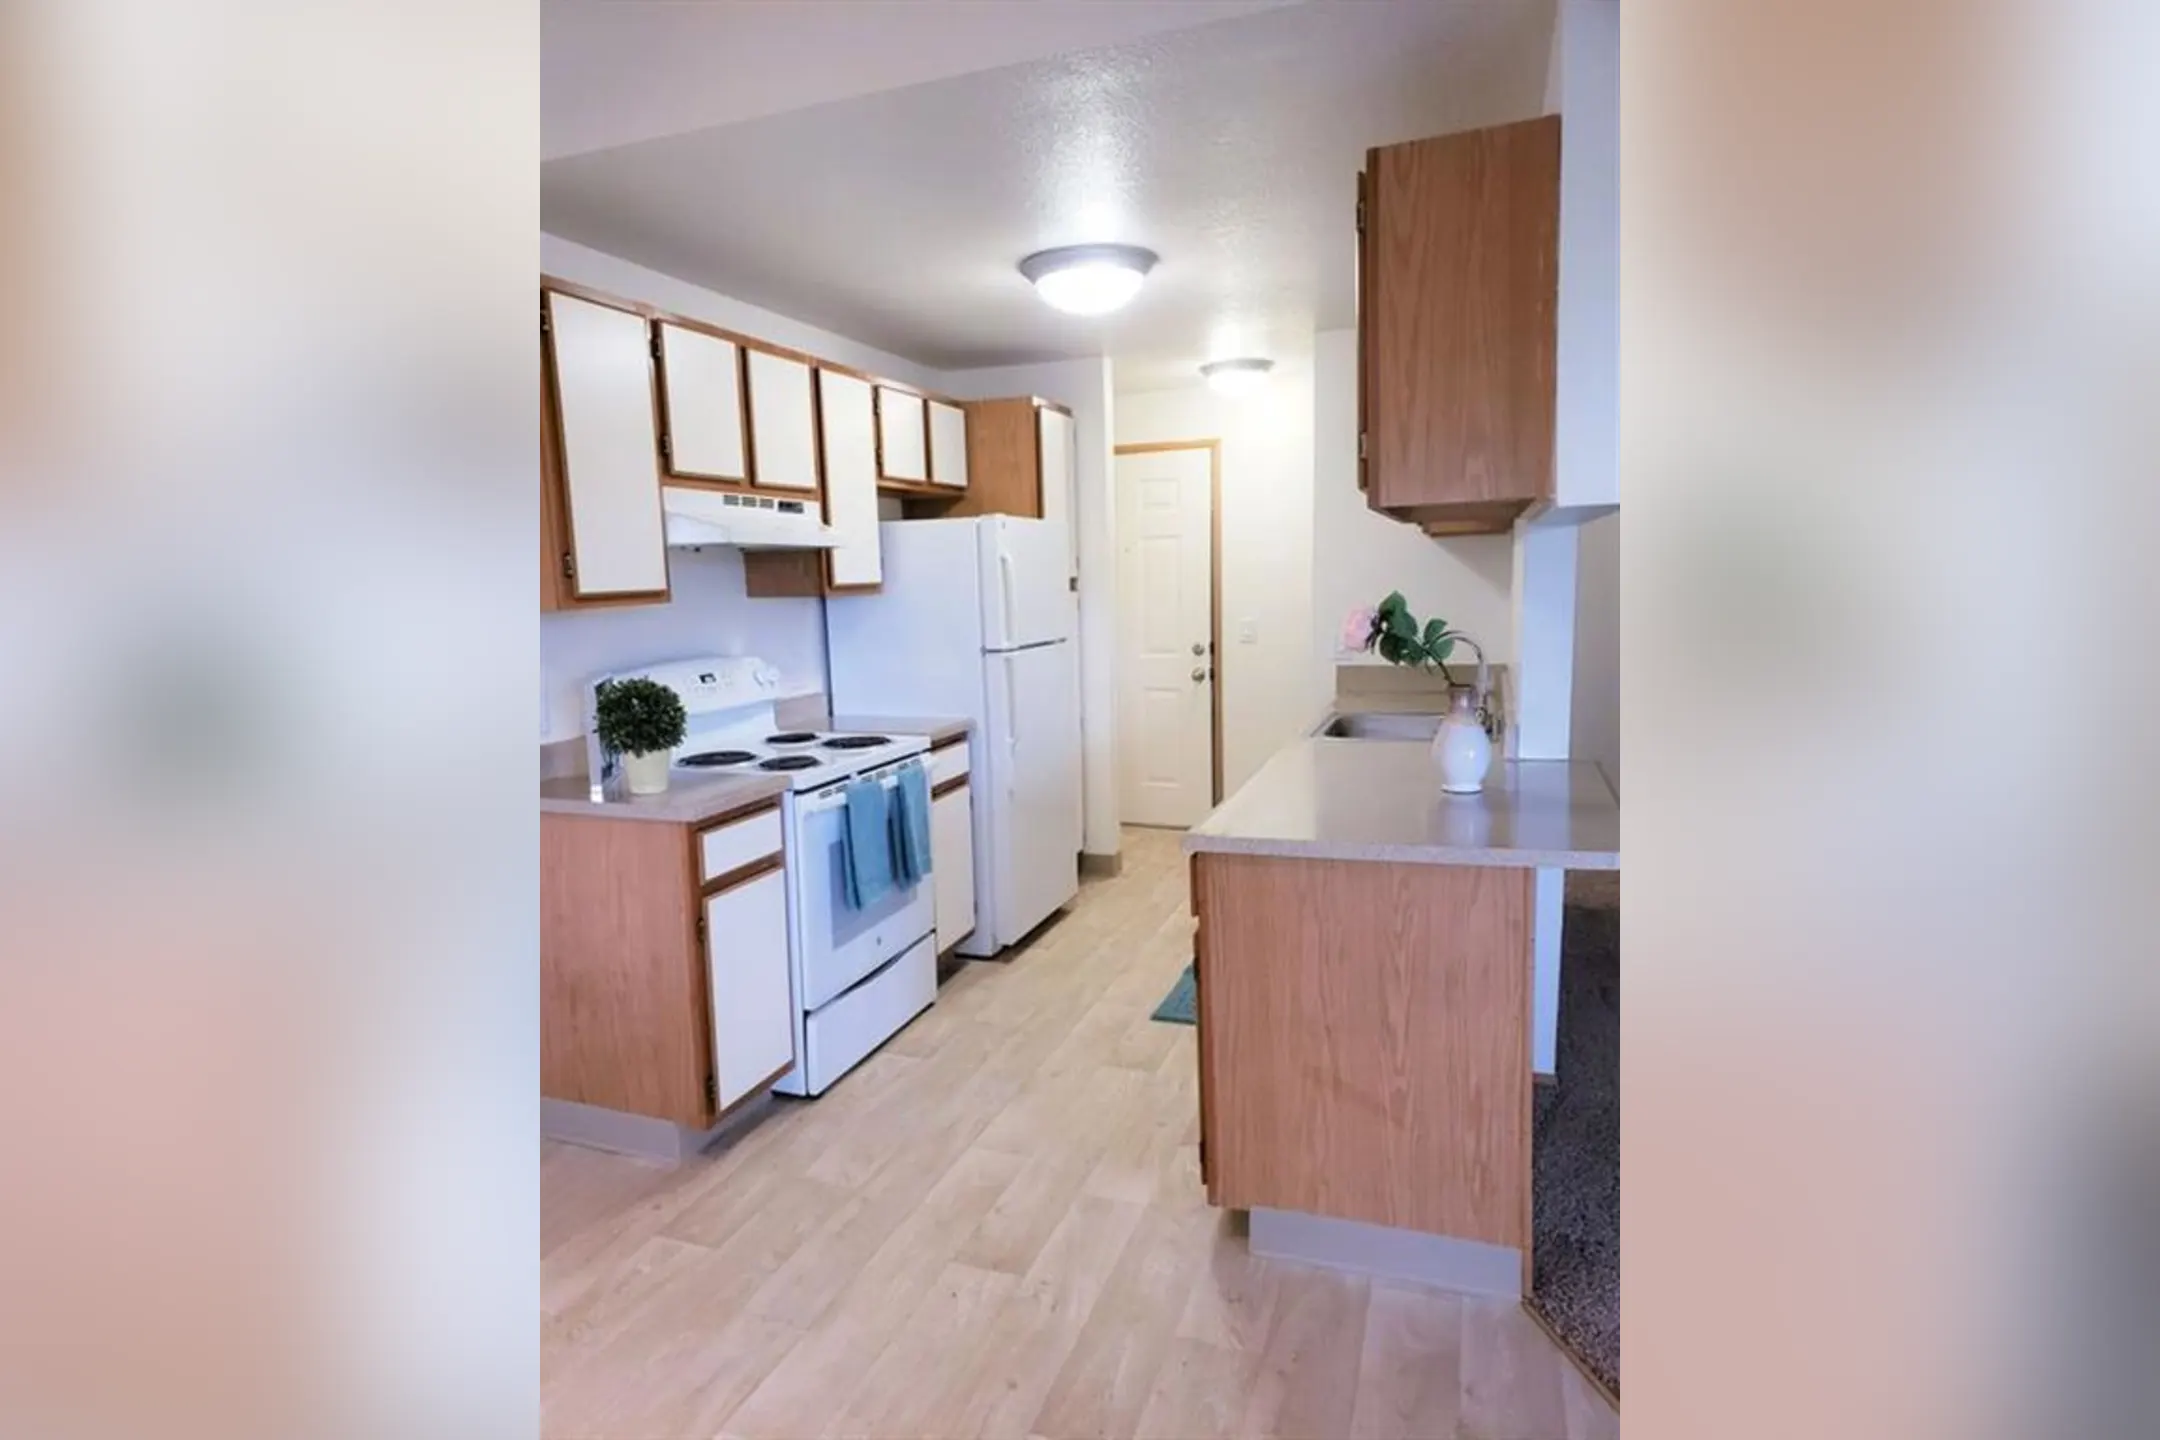 Kitchen - Farisswood Apartments - Gresham, OR